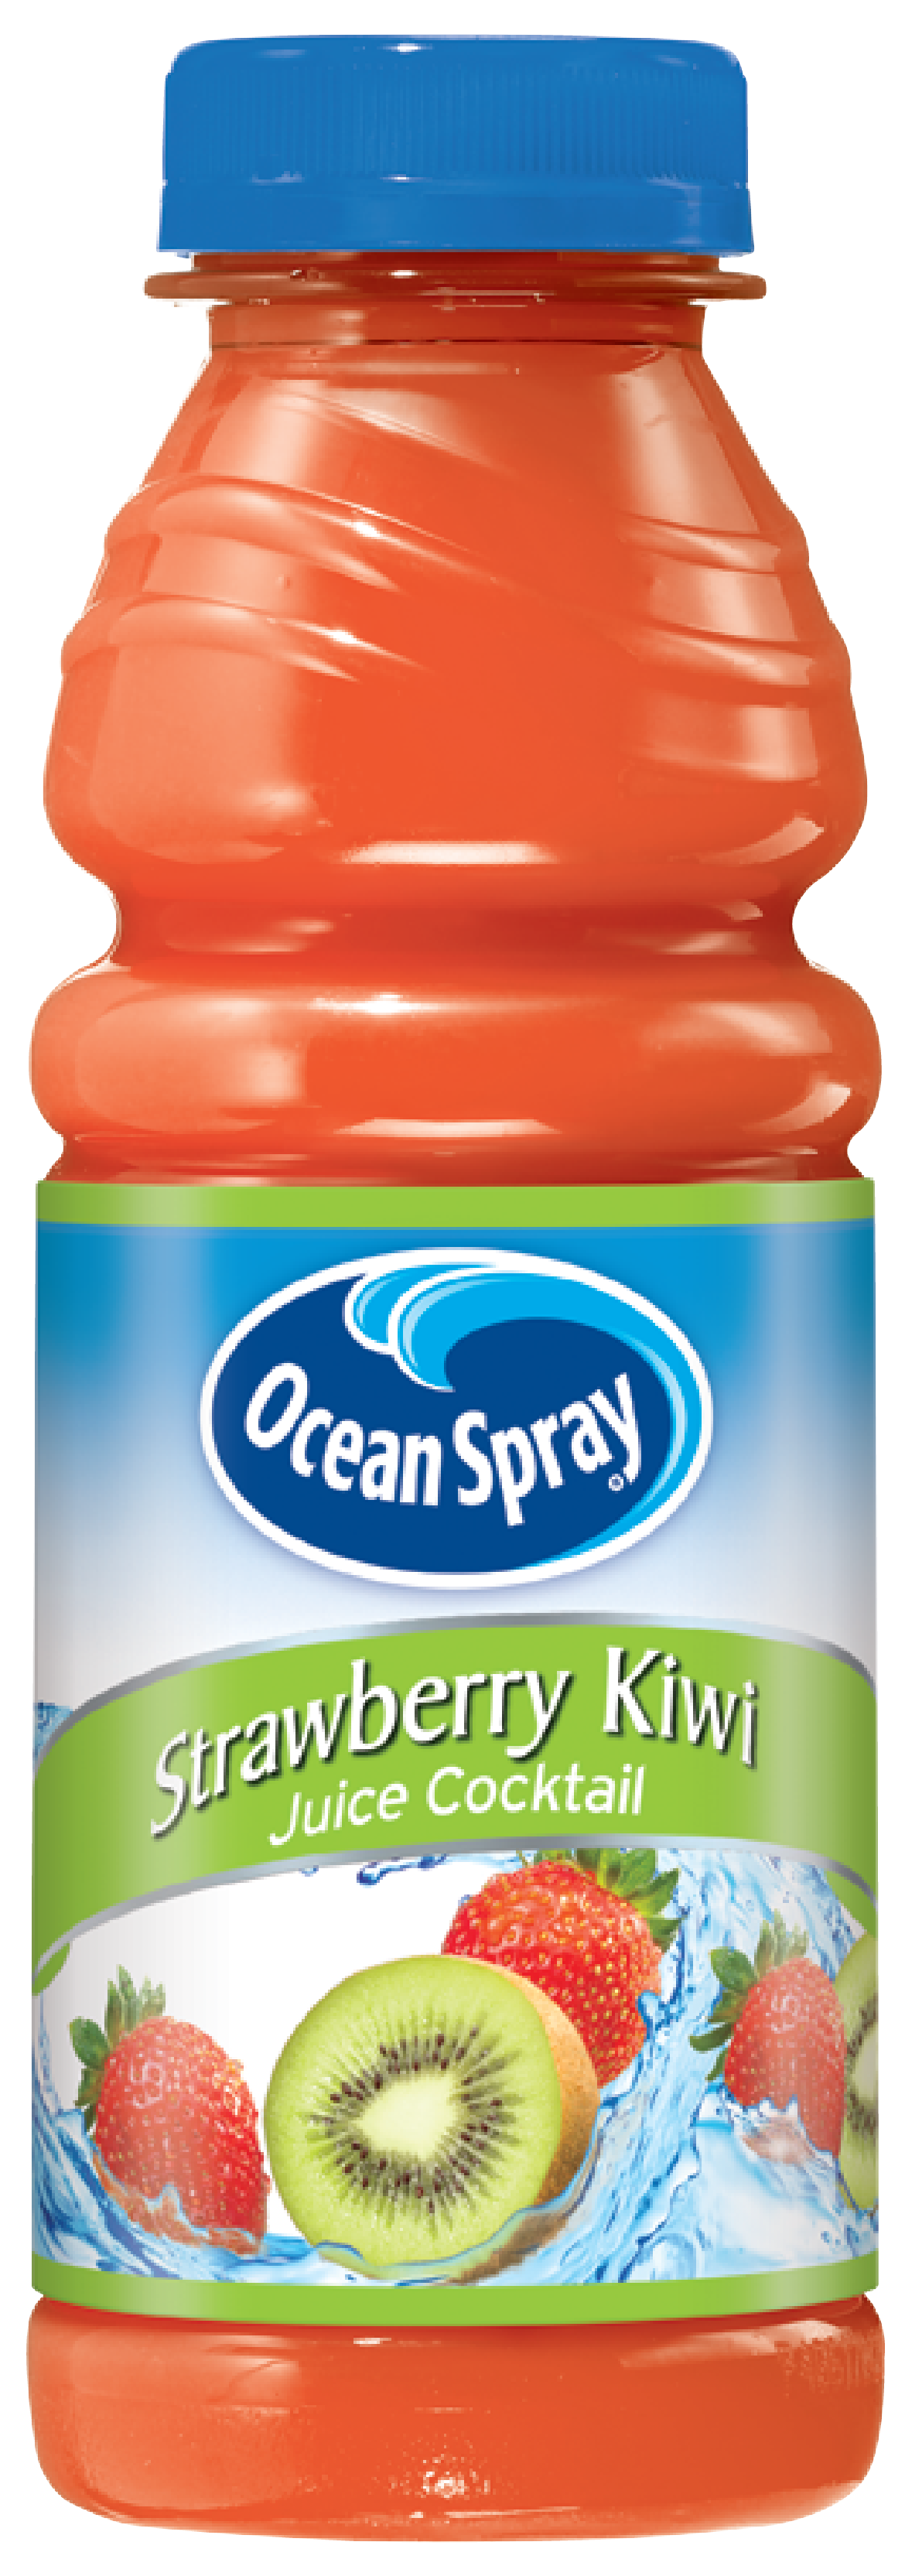 strawberry kiwi juice ocean spray